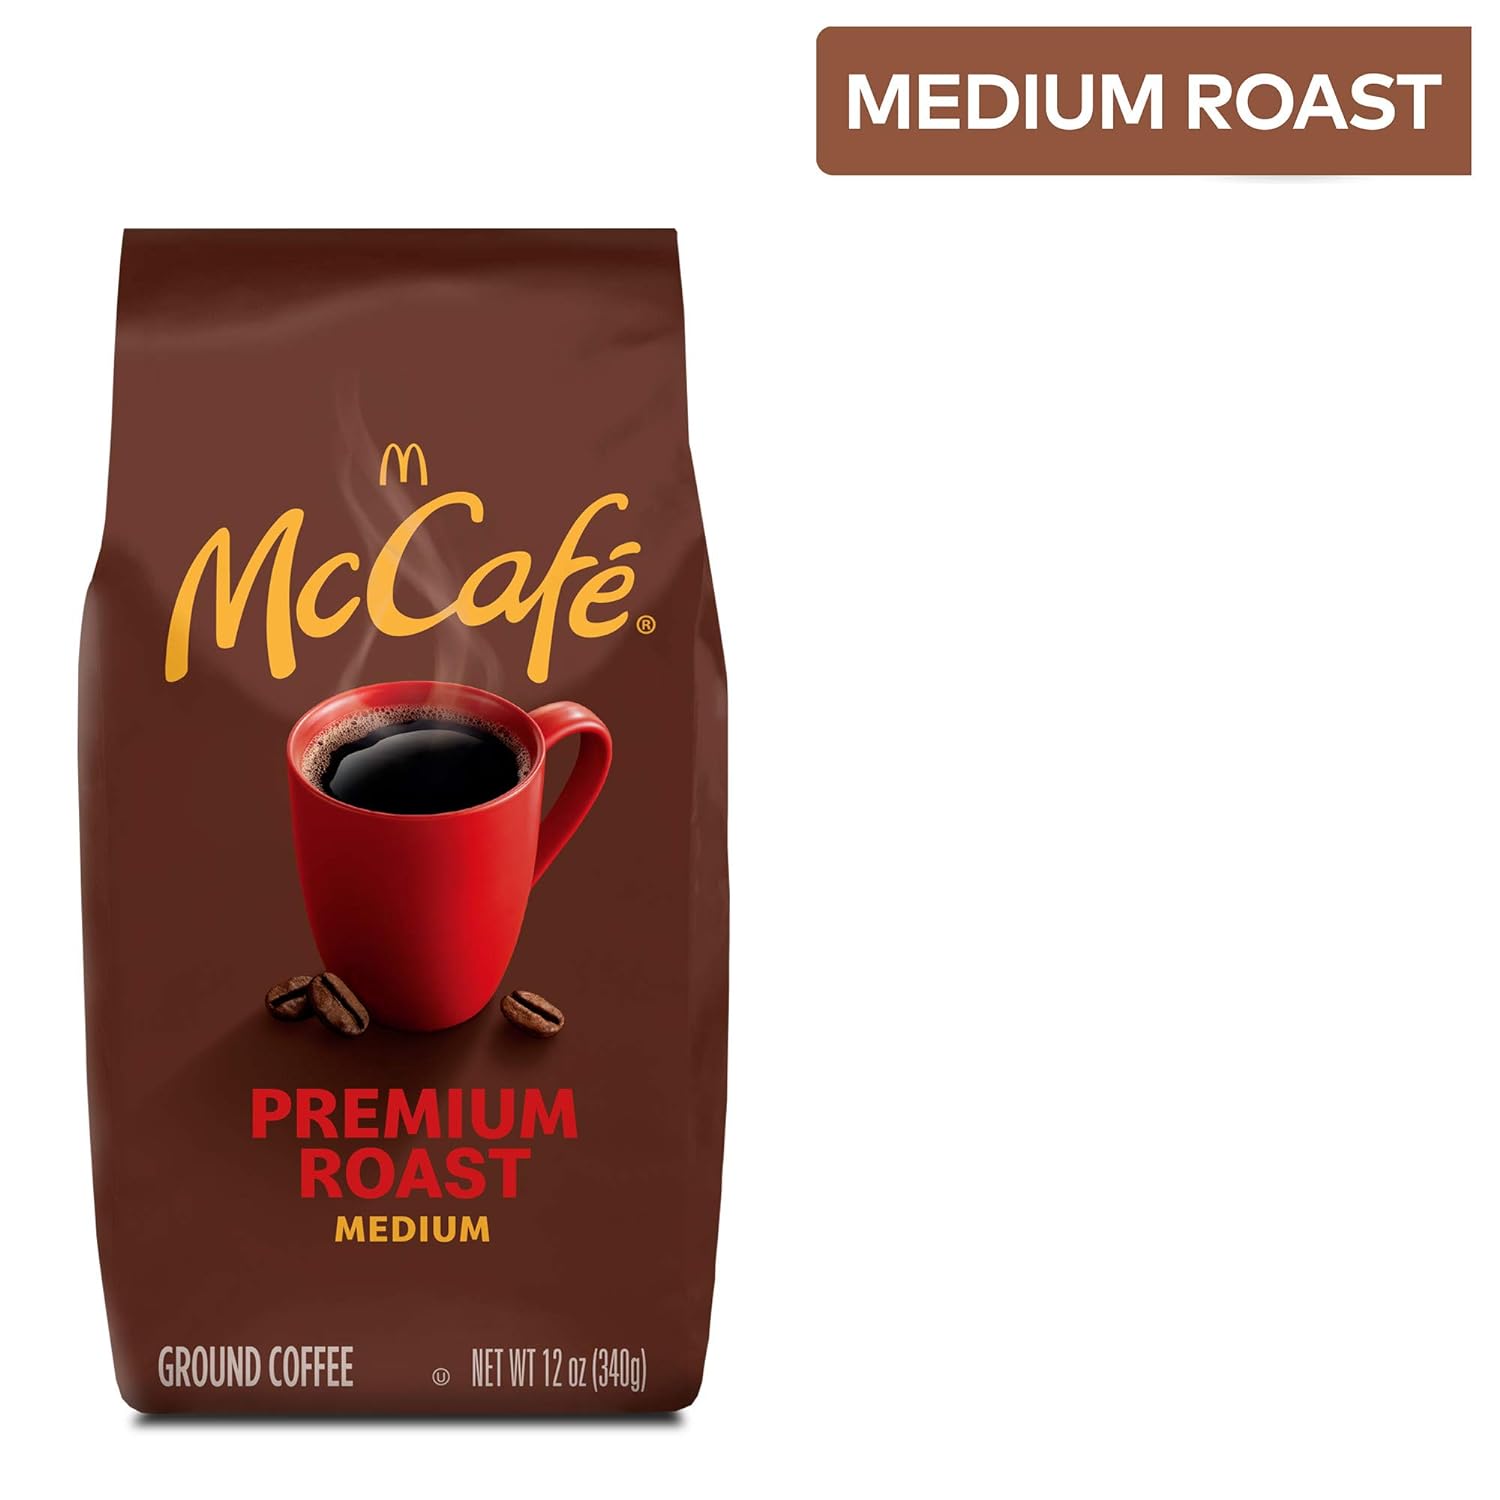 McCafe Premium Roast, Medium Roast Ground Coffee, 12 oz Bag : Grocery & Gourmet Food